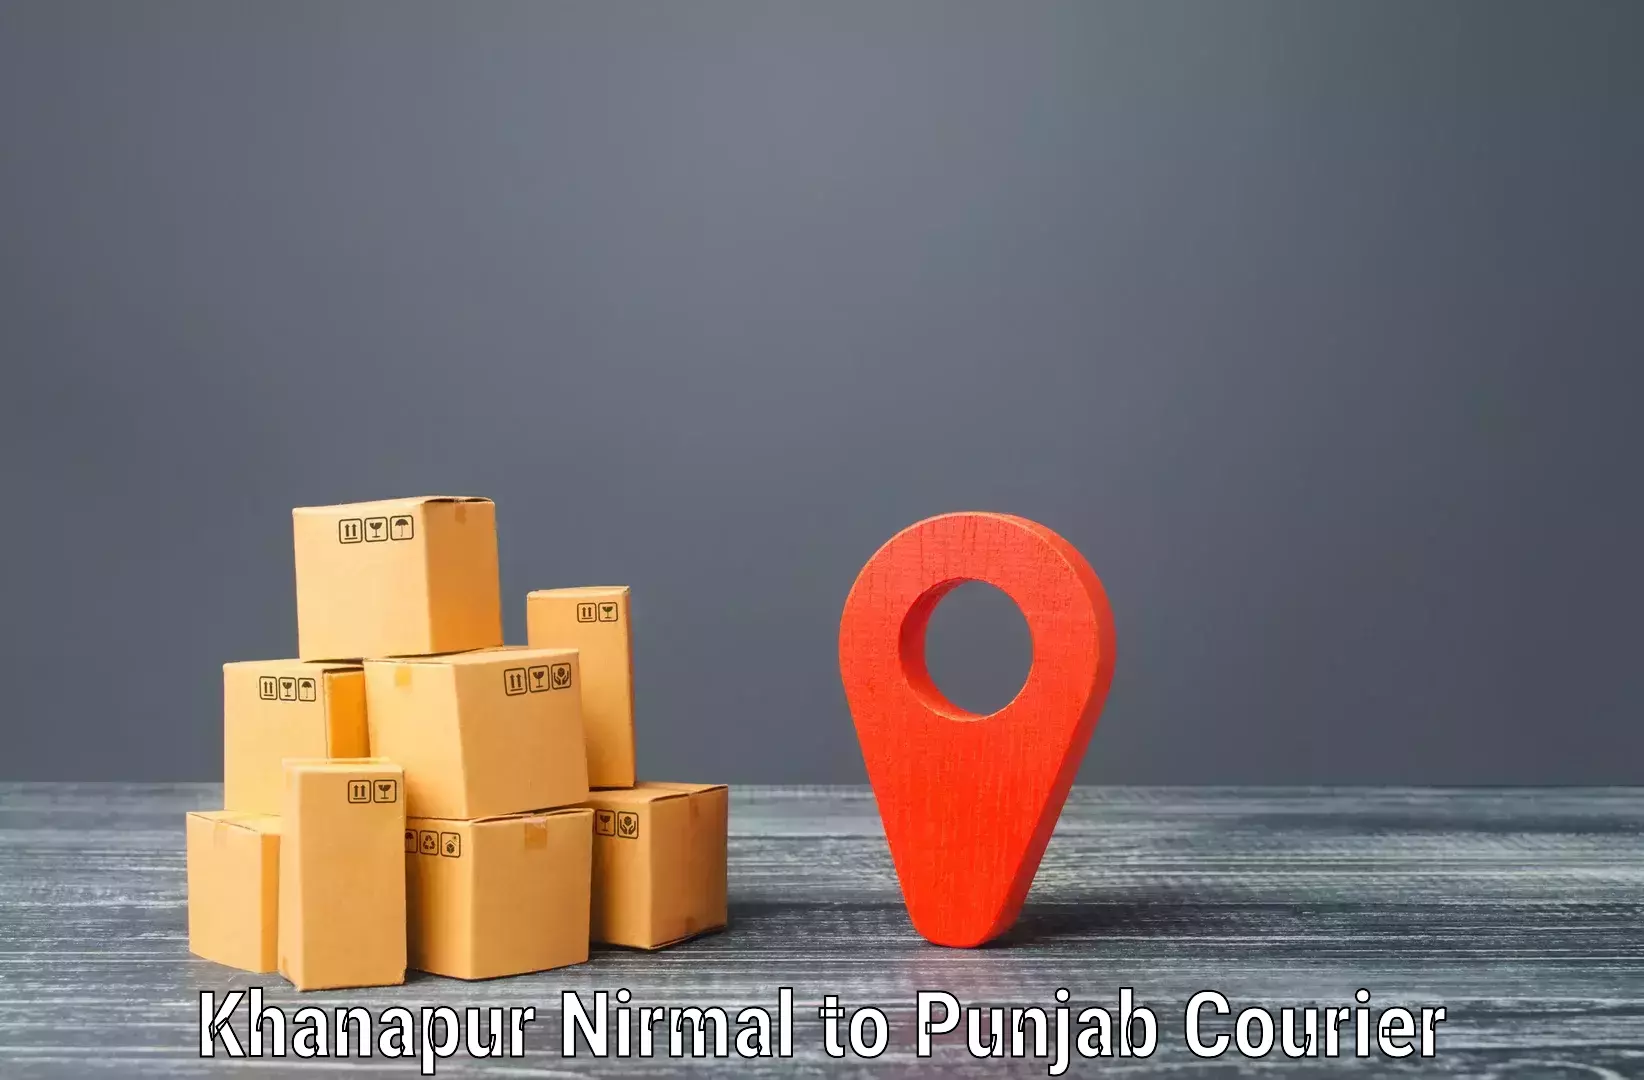 International courier networks Khanapur Nirmal to Faridkot